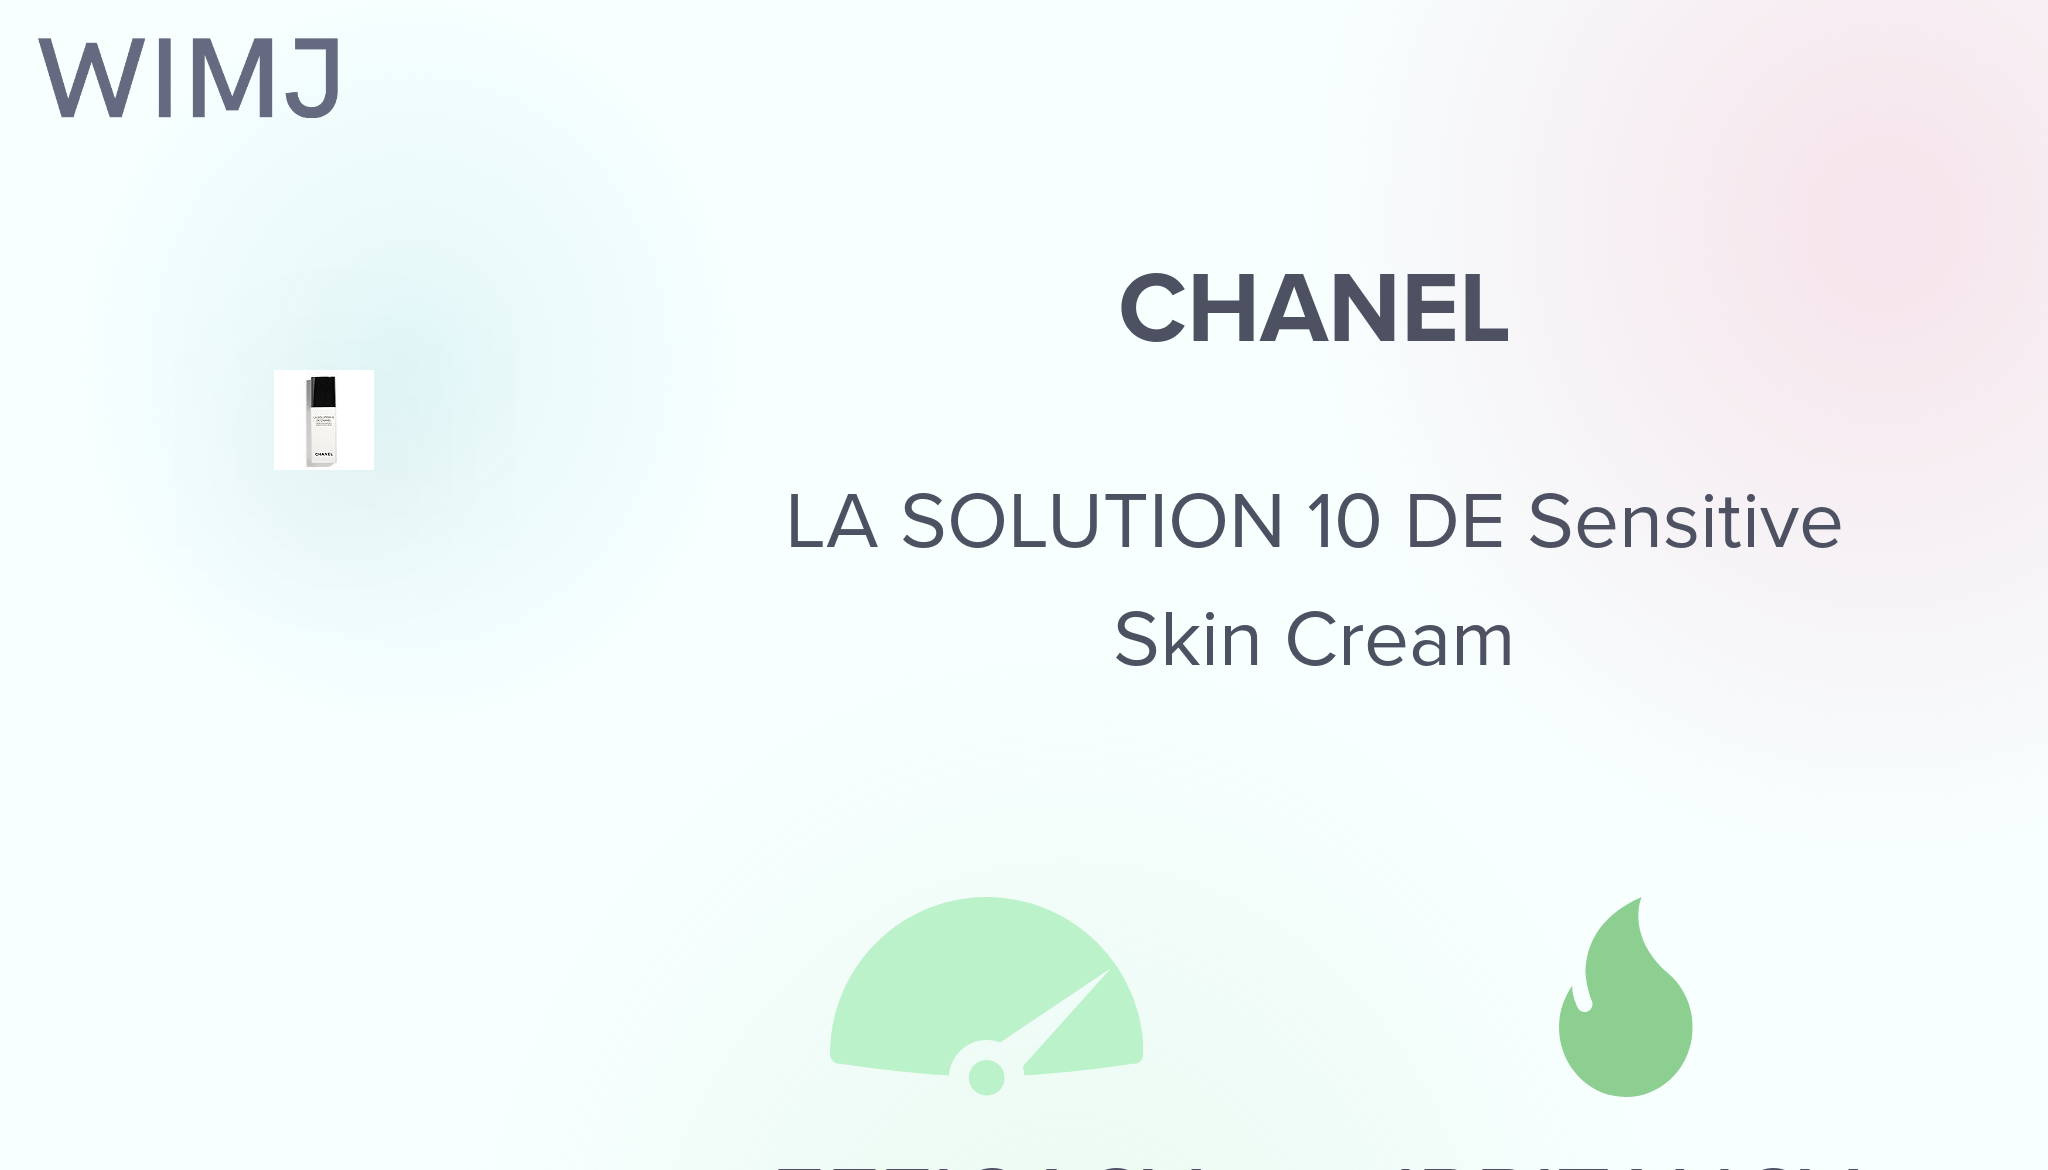 Review: CHANEL - LA SOLUTION 10 DE Sensitive Skin Cream - WIMJ